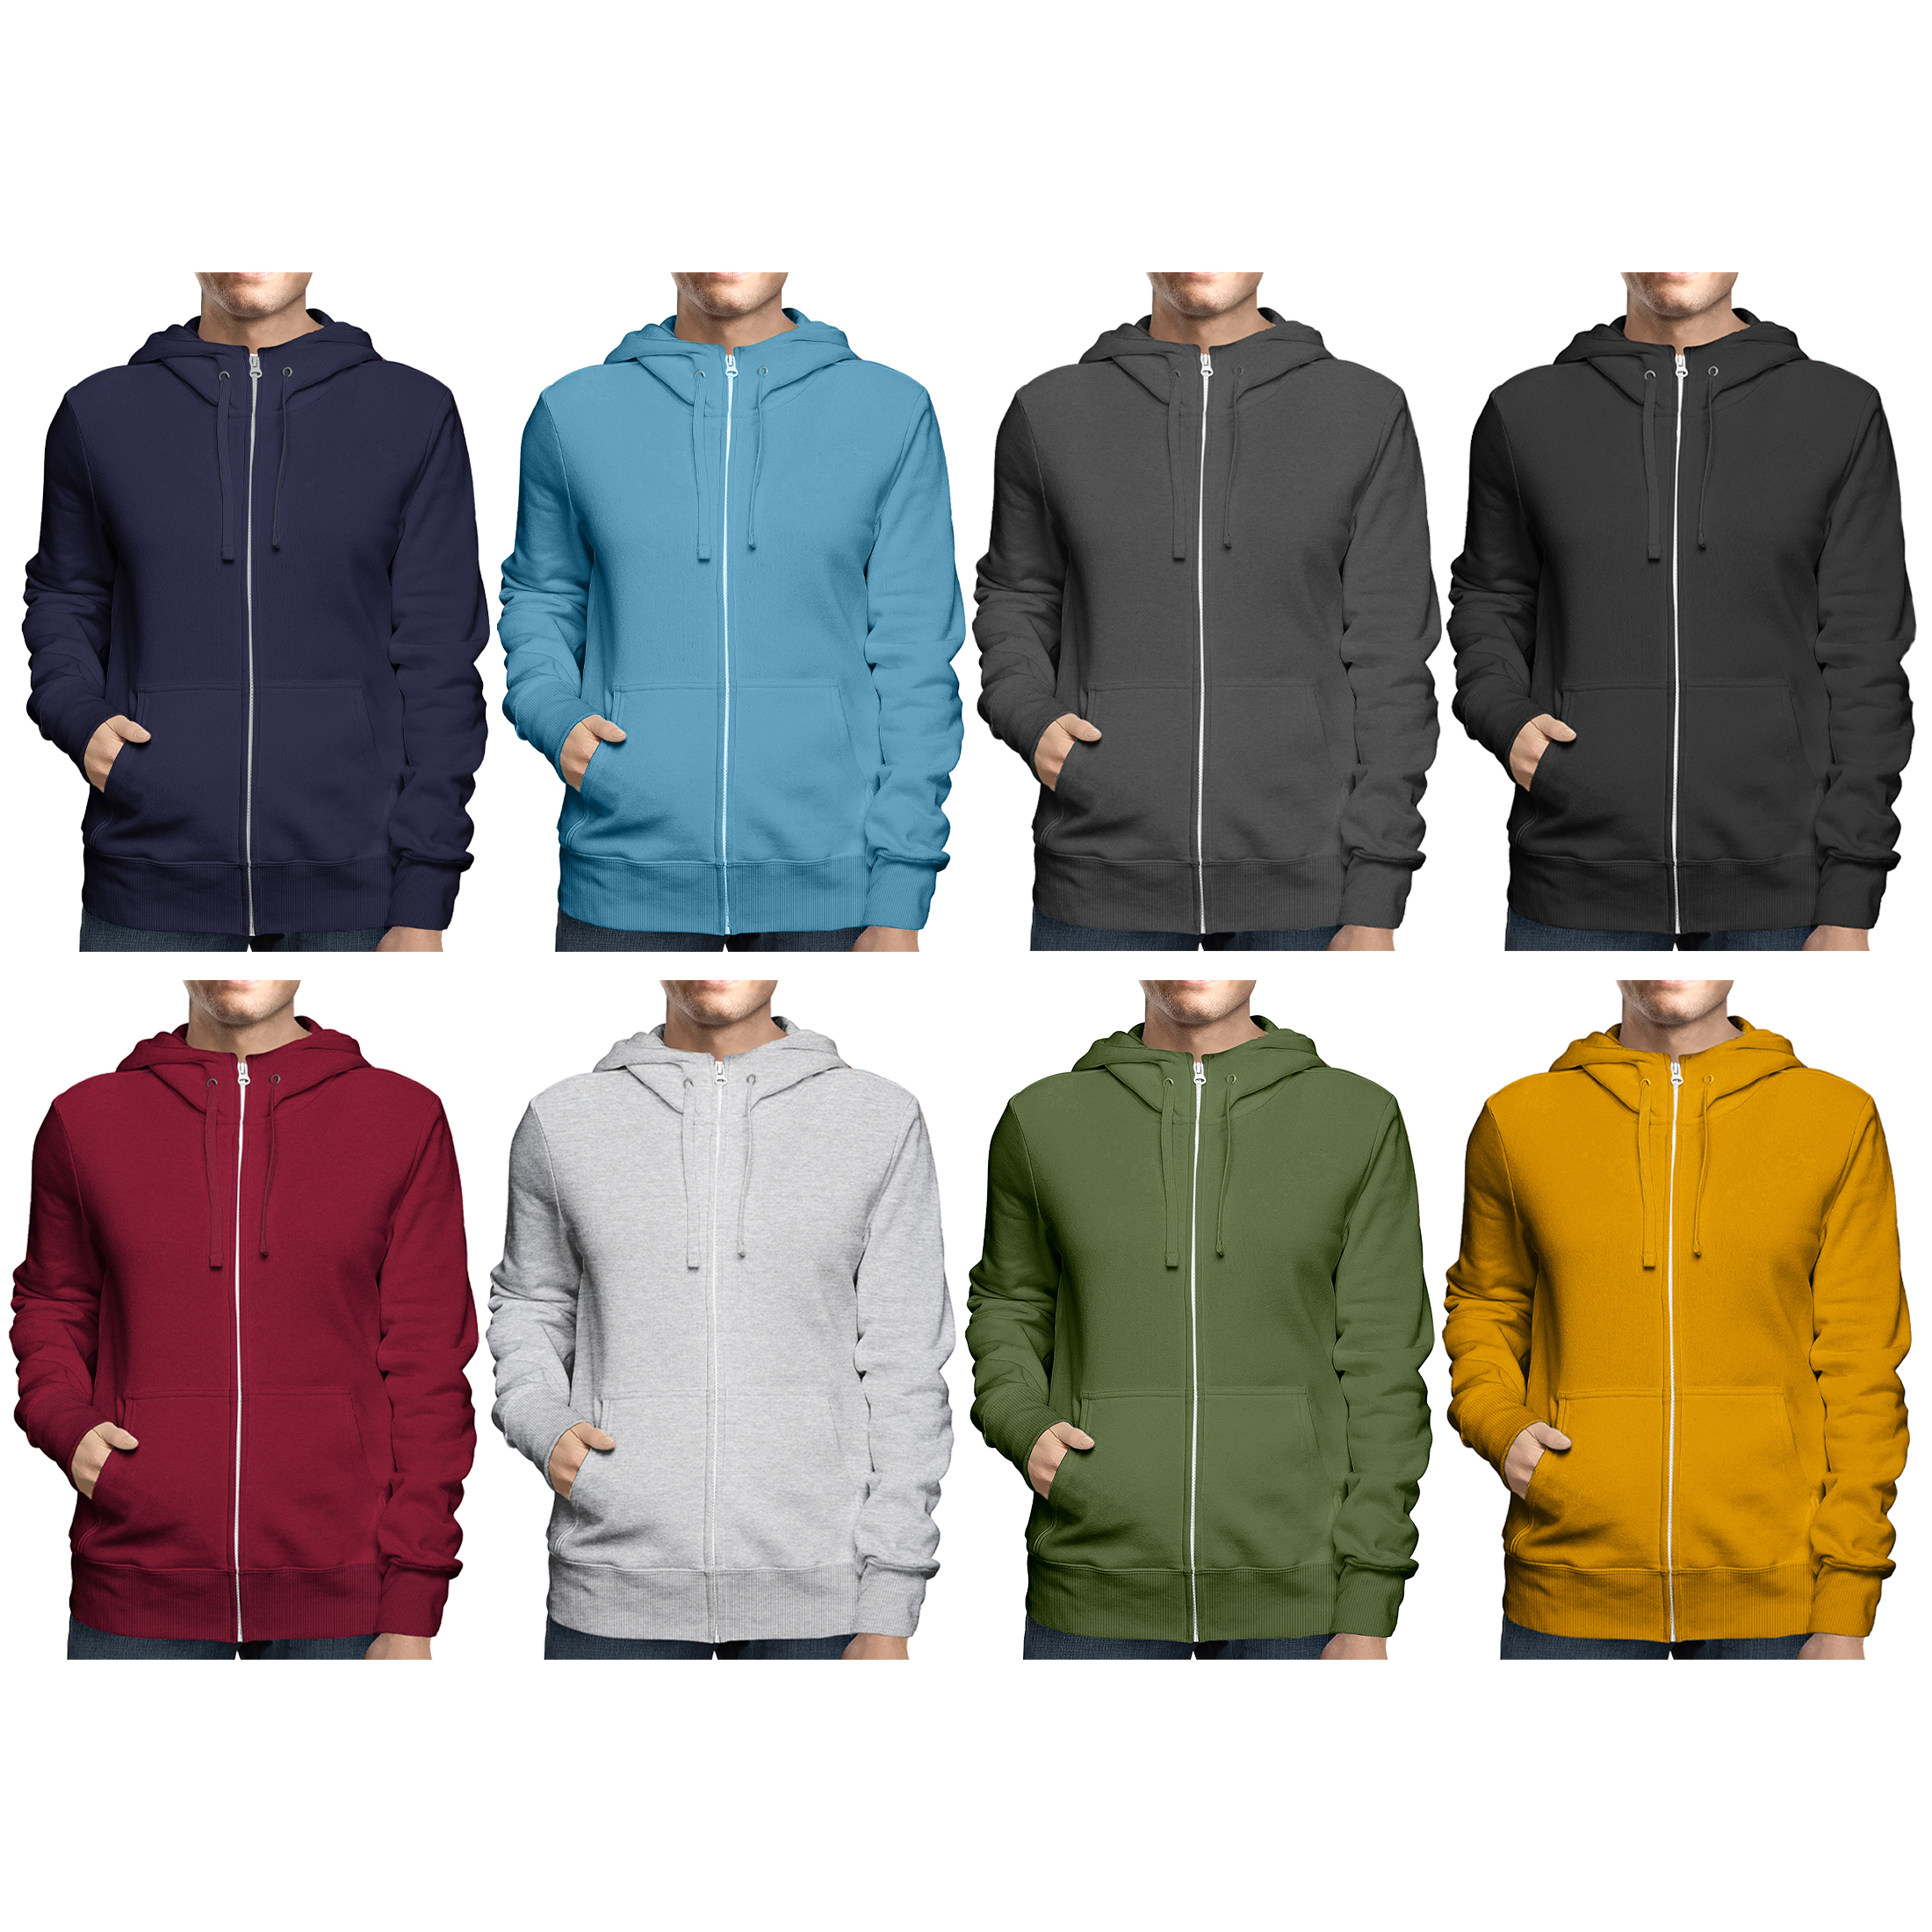 2-Pack: Men's Full Zip Up Fleece-Lined Hoodie Sweatshirt (Big & Tall Size Available) - Black & Burgundy, X-large